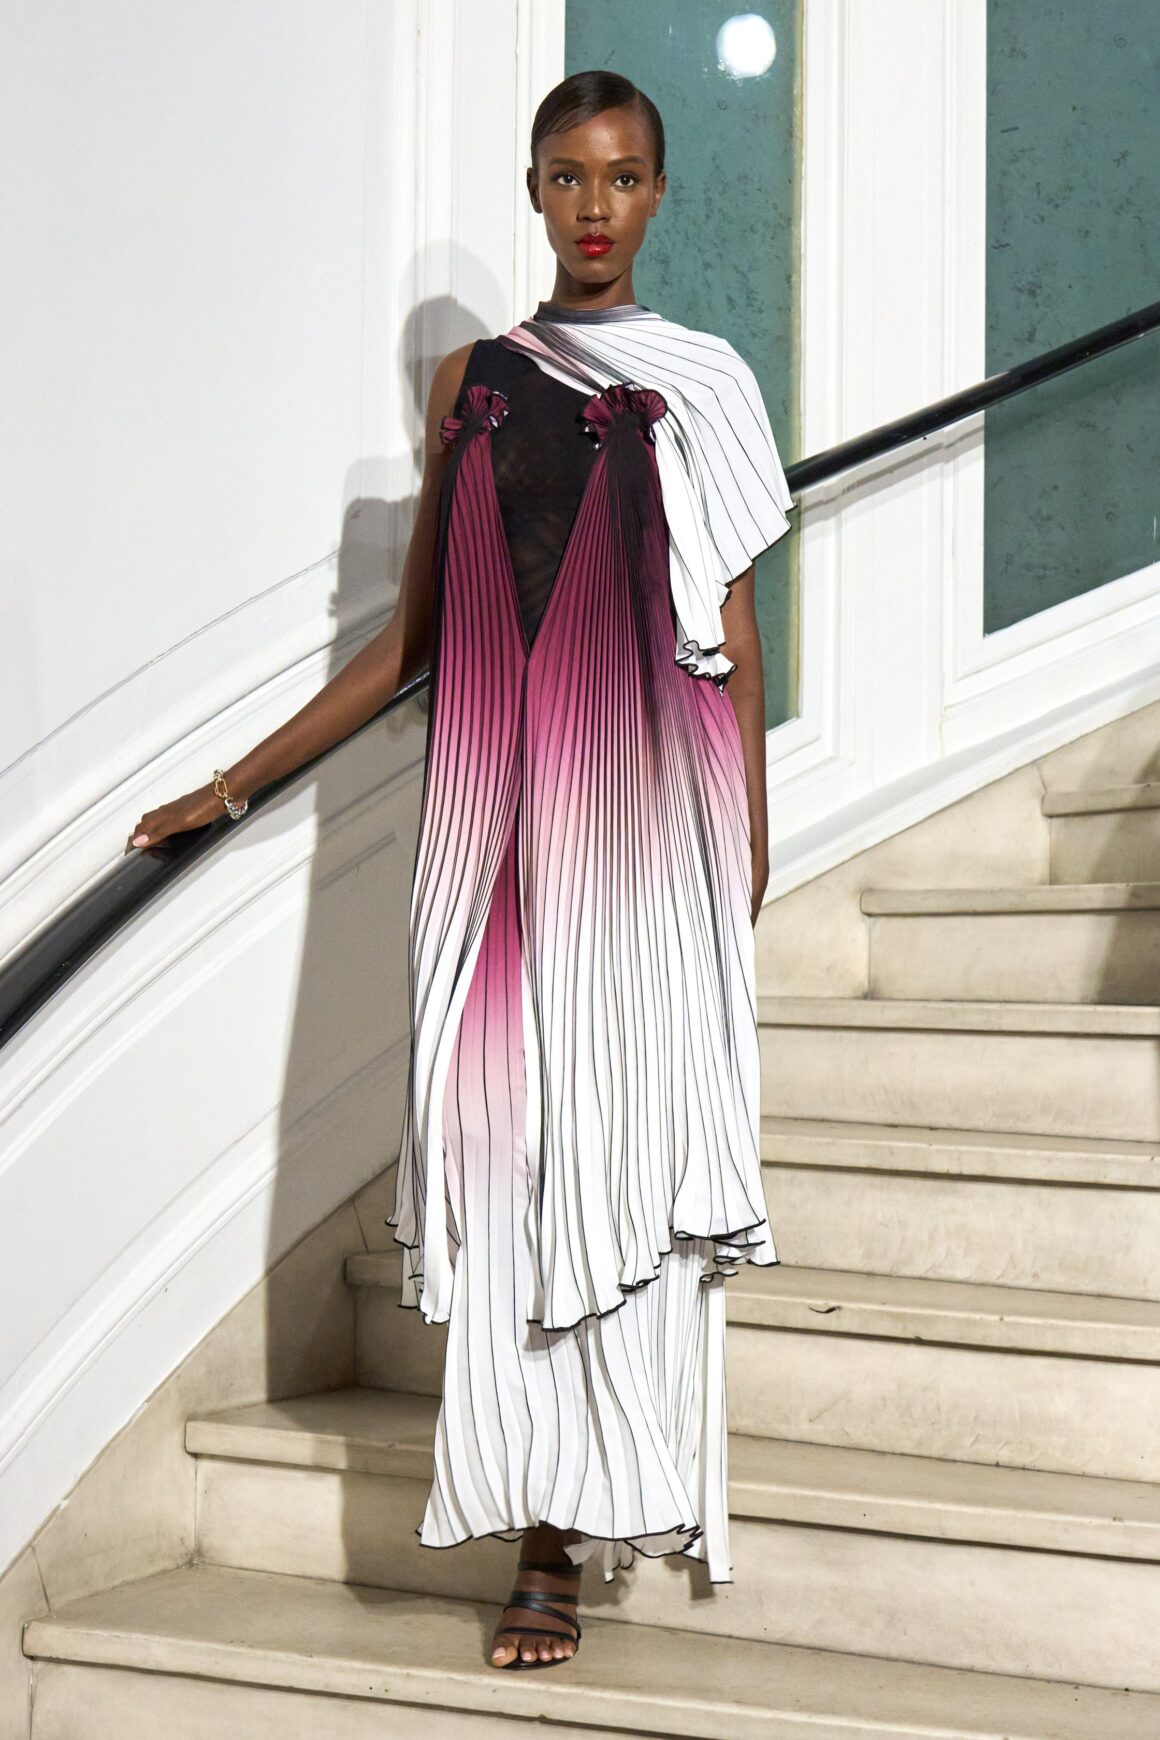 Christian Siriano Showcases Old Hollywood Glamour at New York Fashion Week Spring Summer 20235